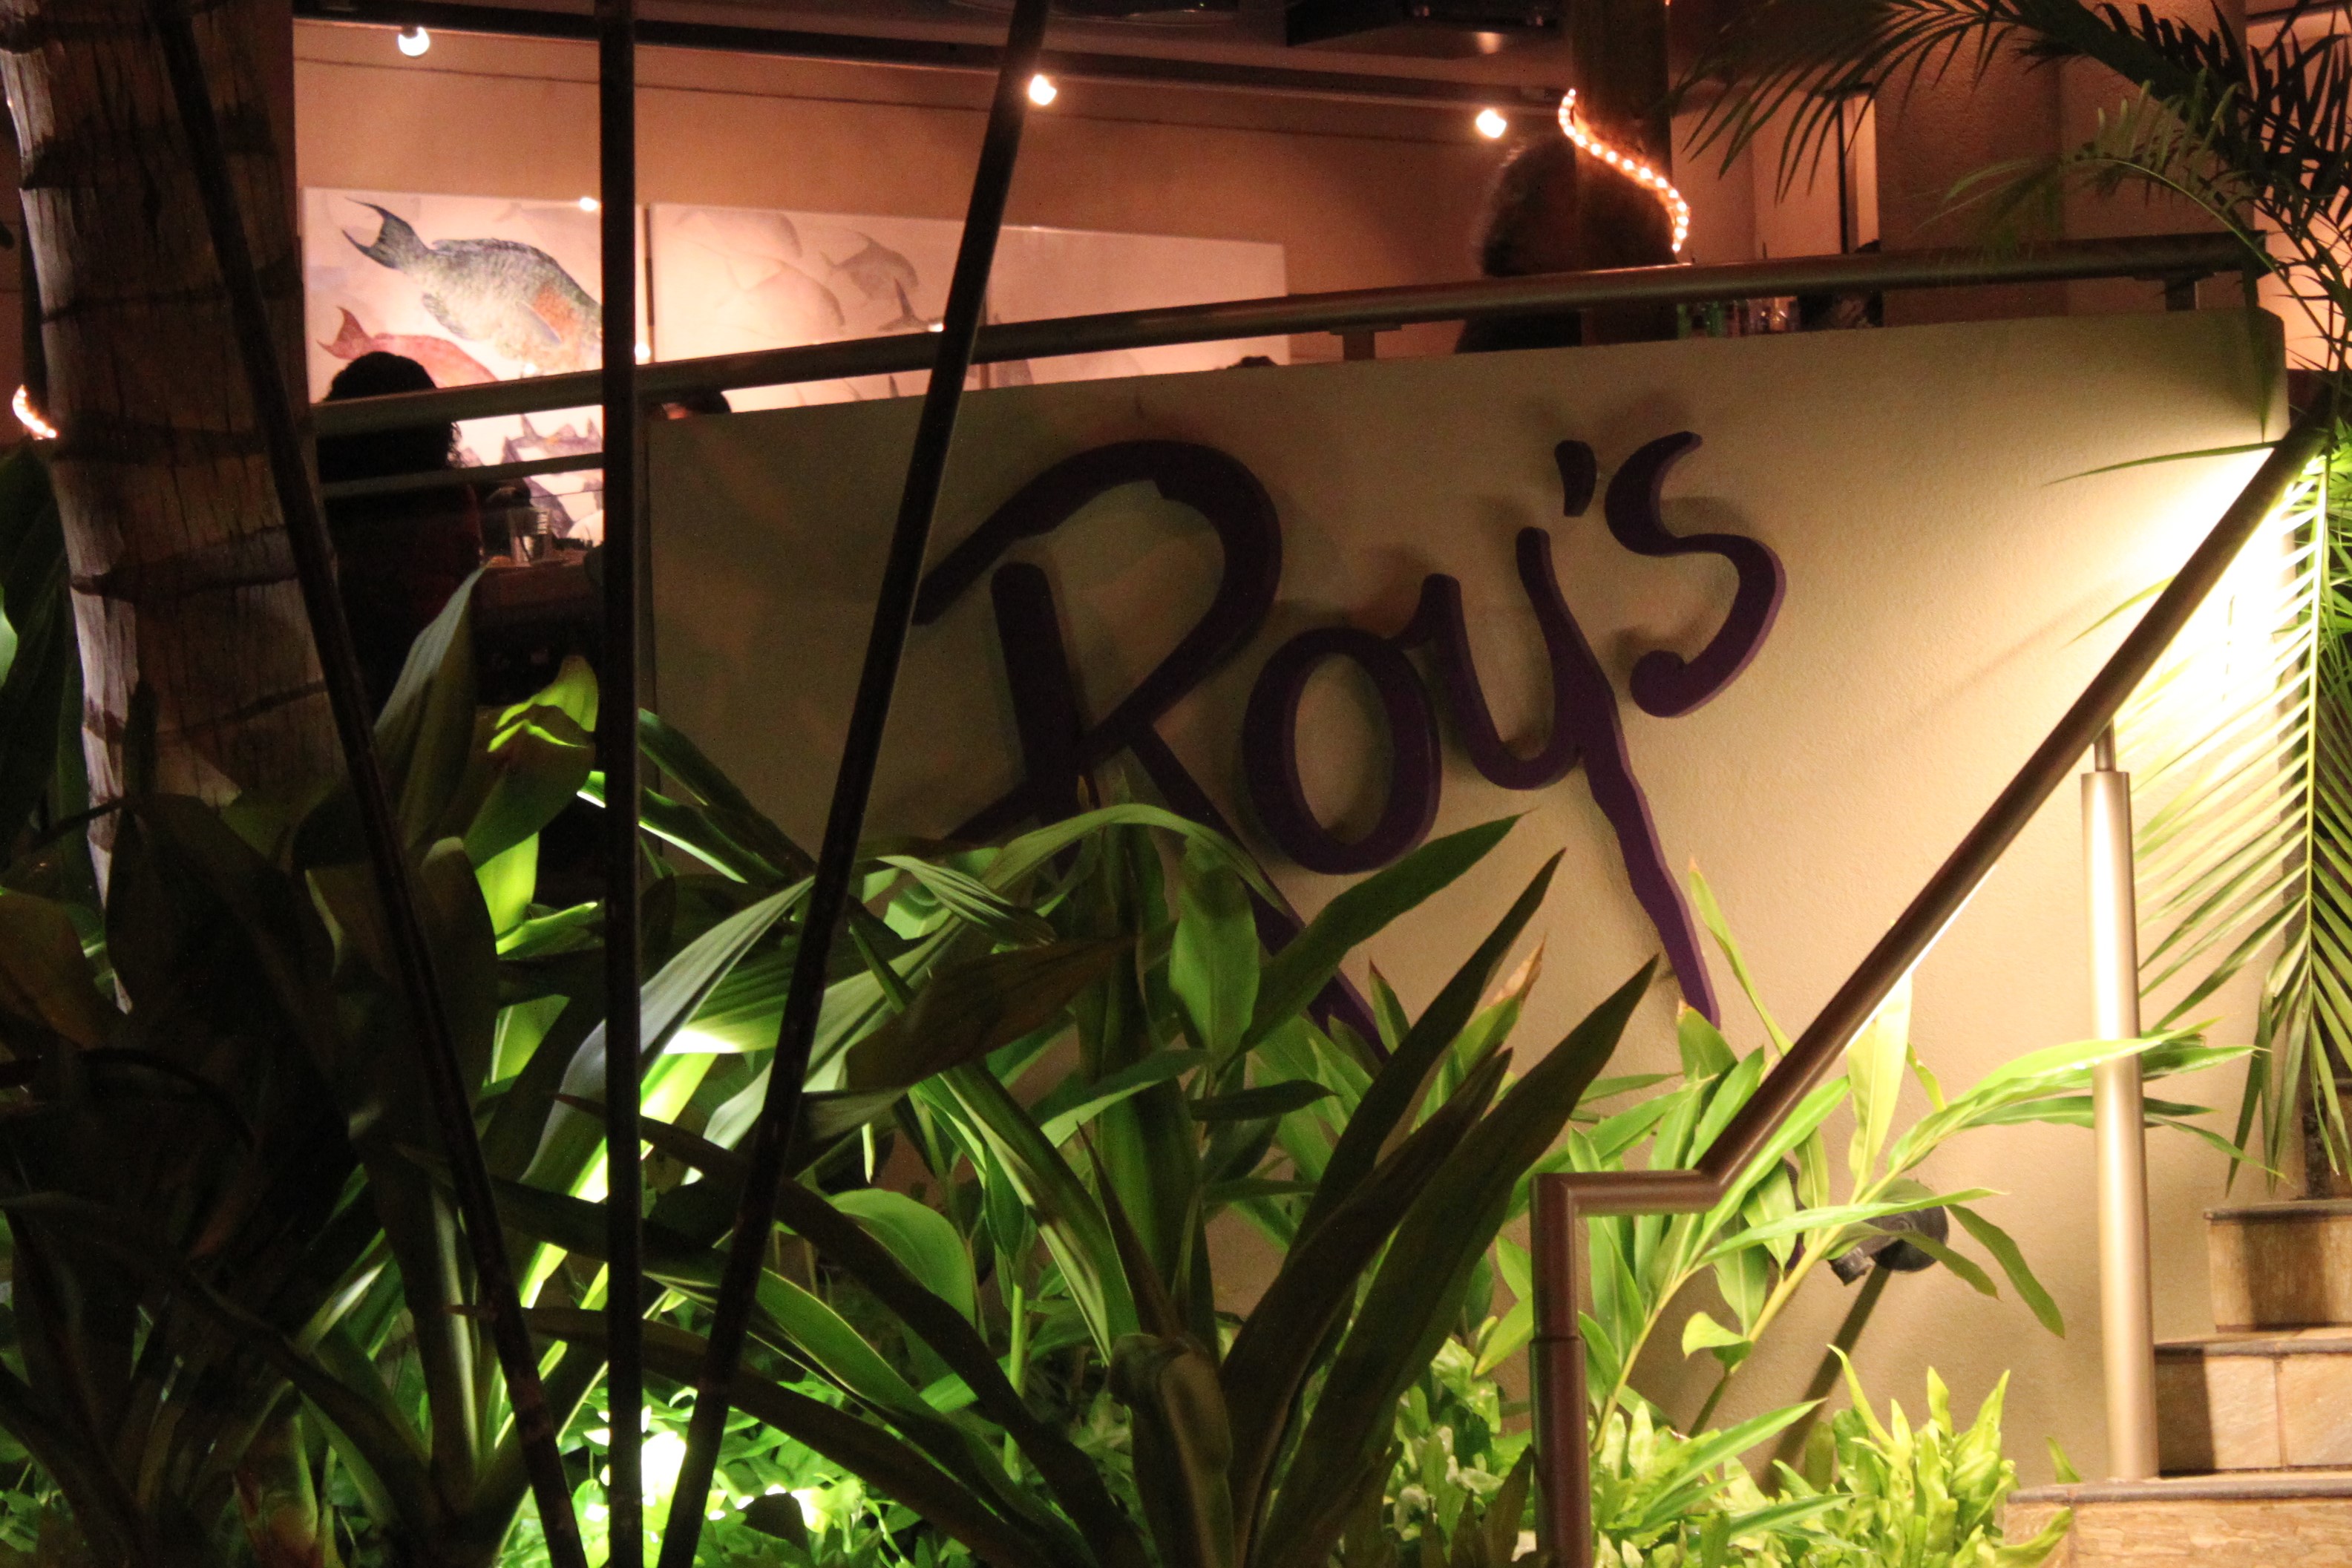 Roy’s Restaurant